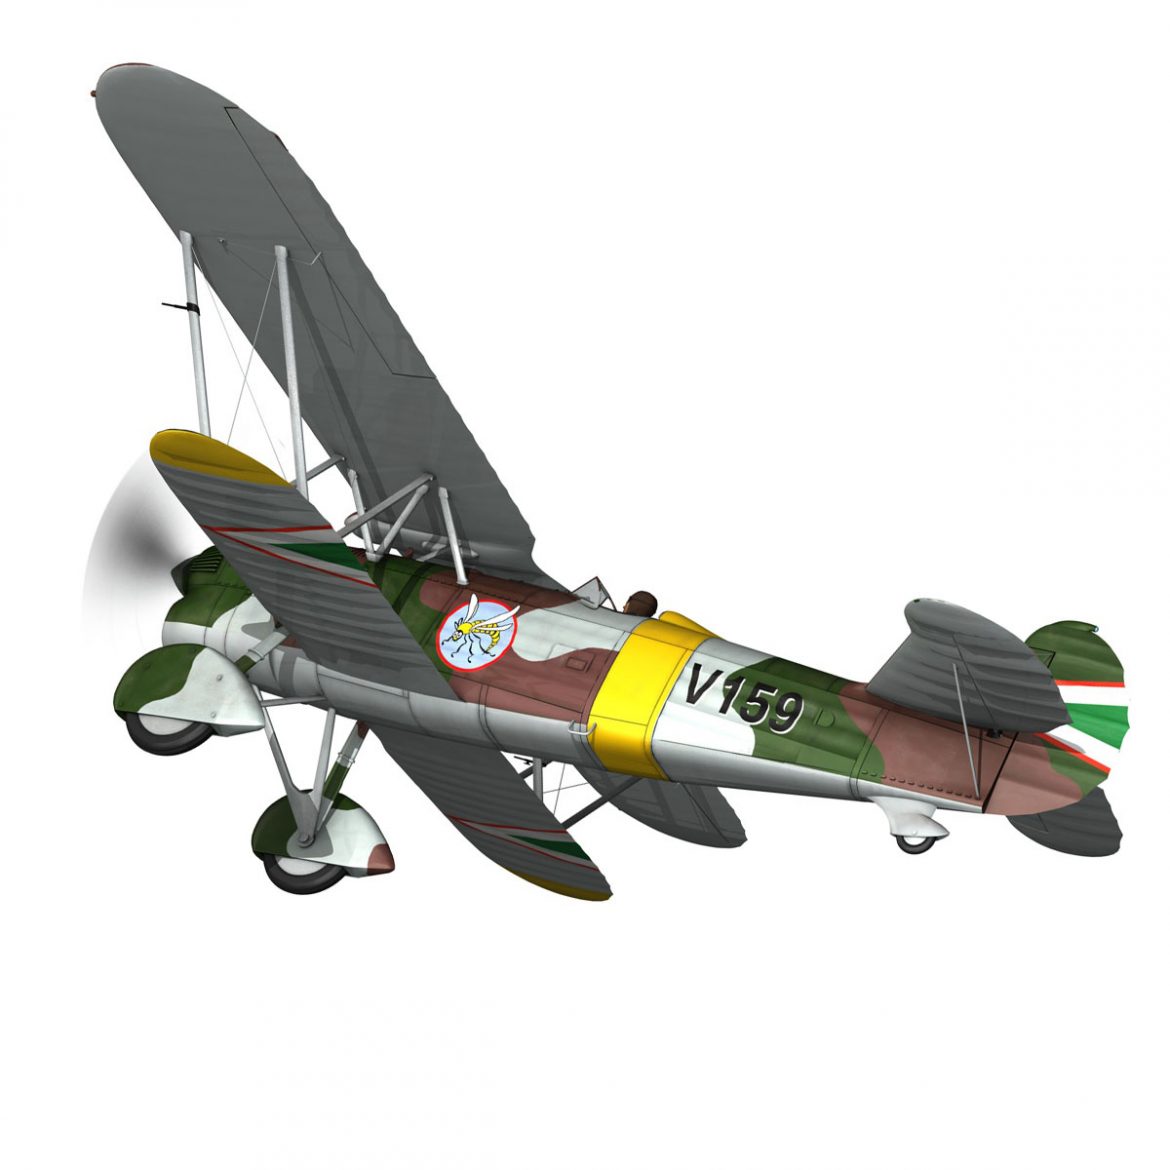 fiat cr.32 – hungarian royal air force – v159 3d model fbx c4d lwo obj 299967